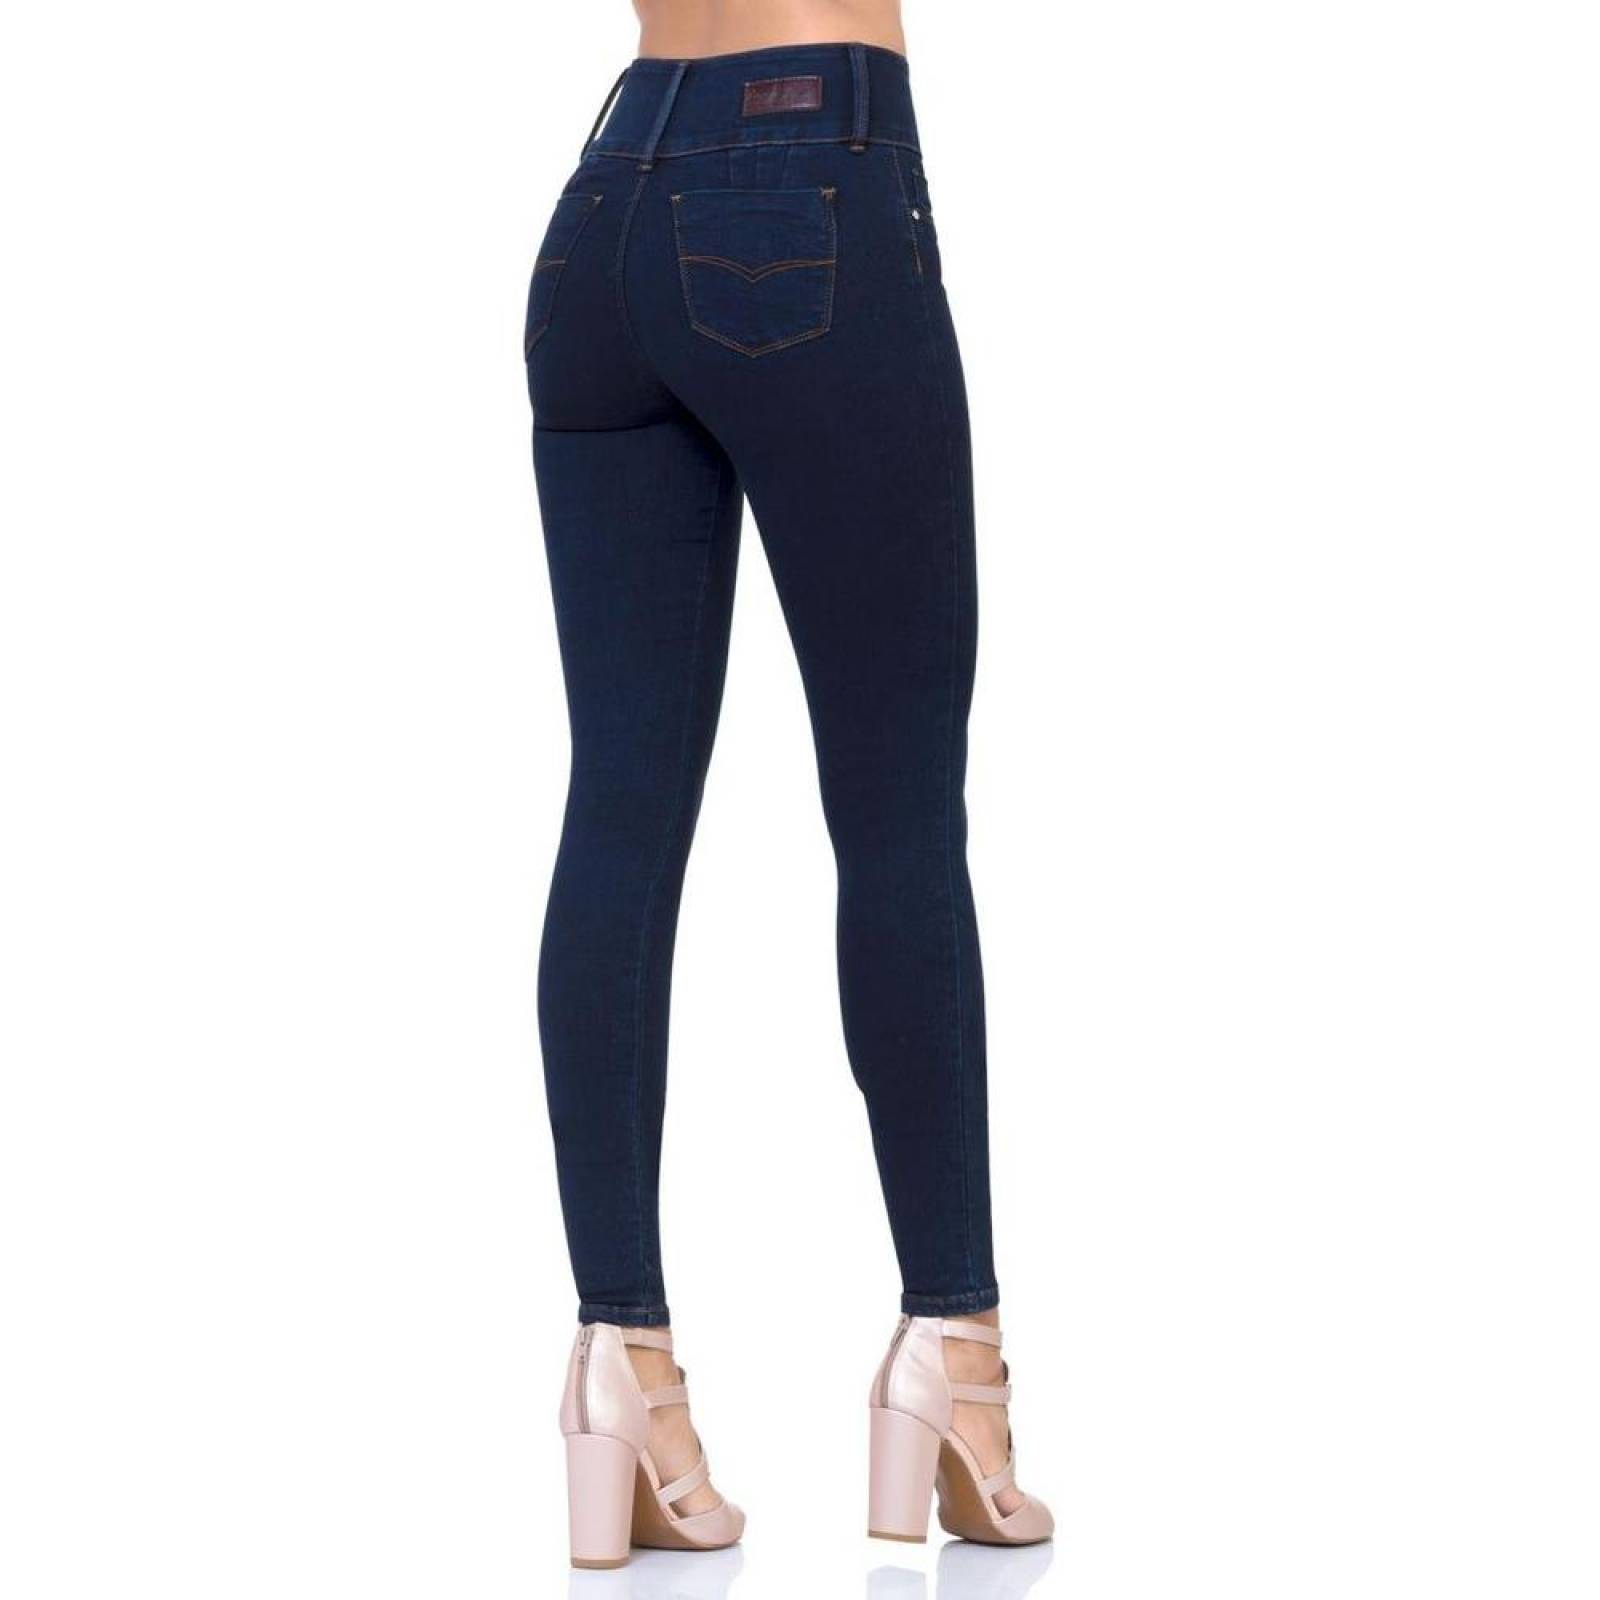 Jeans Básico Mujer Oggi Satin 59102143 Mezclilla Stretch 